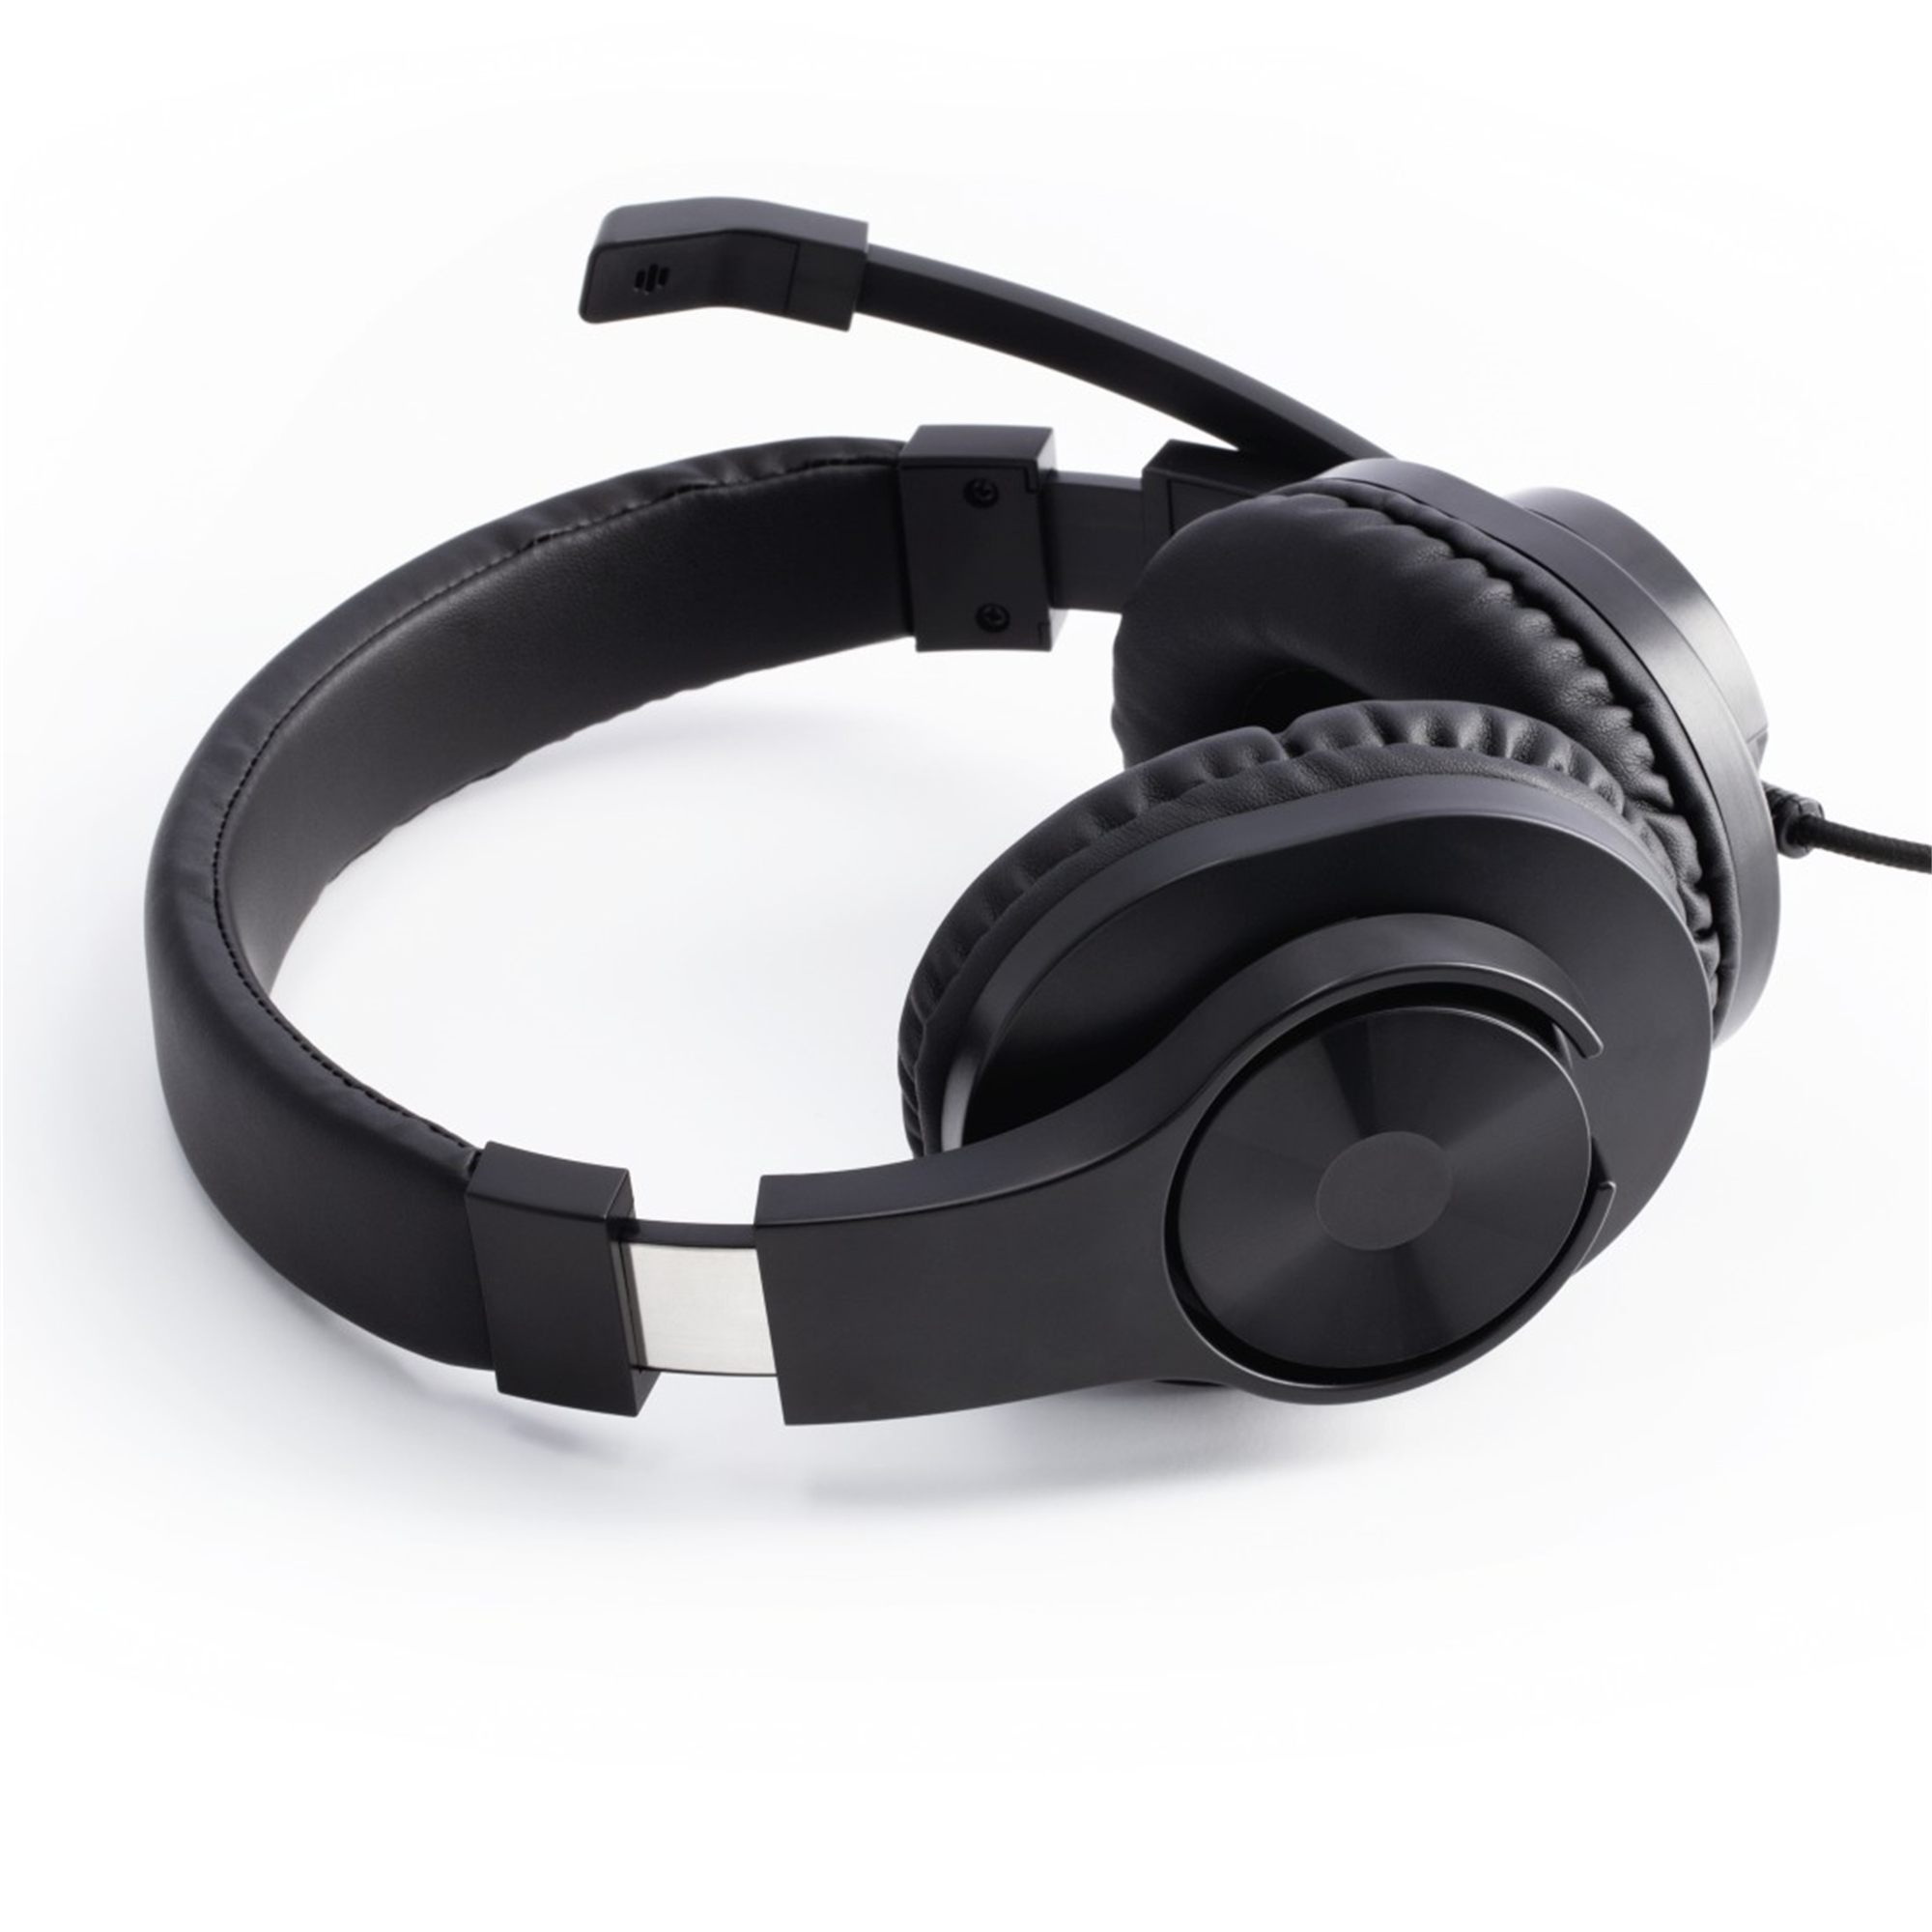 schwarz Over-ear HAMA Headset HS-P300,